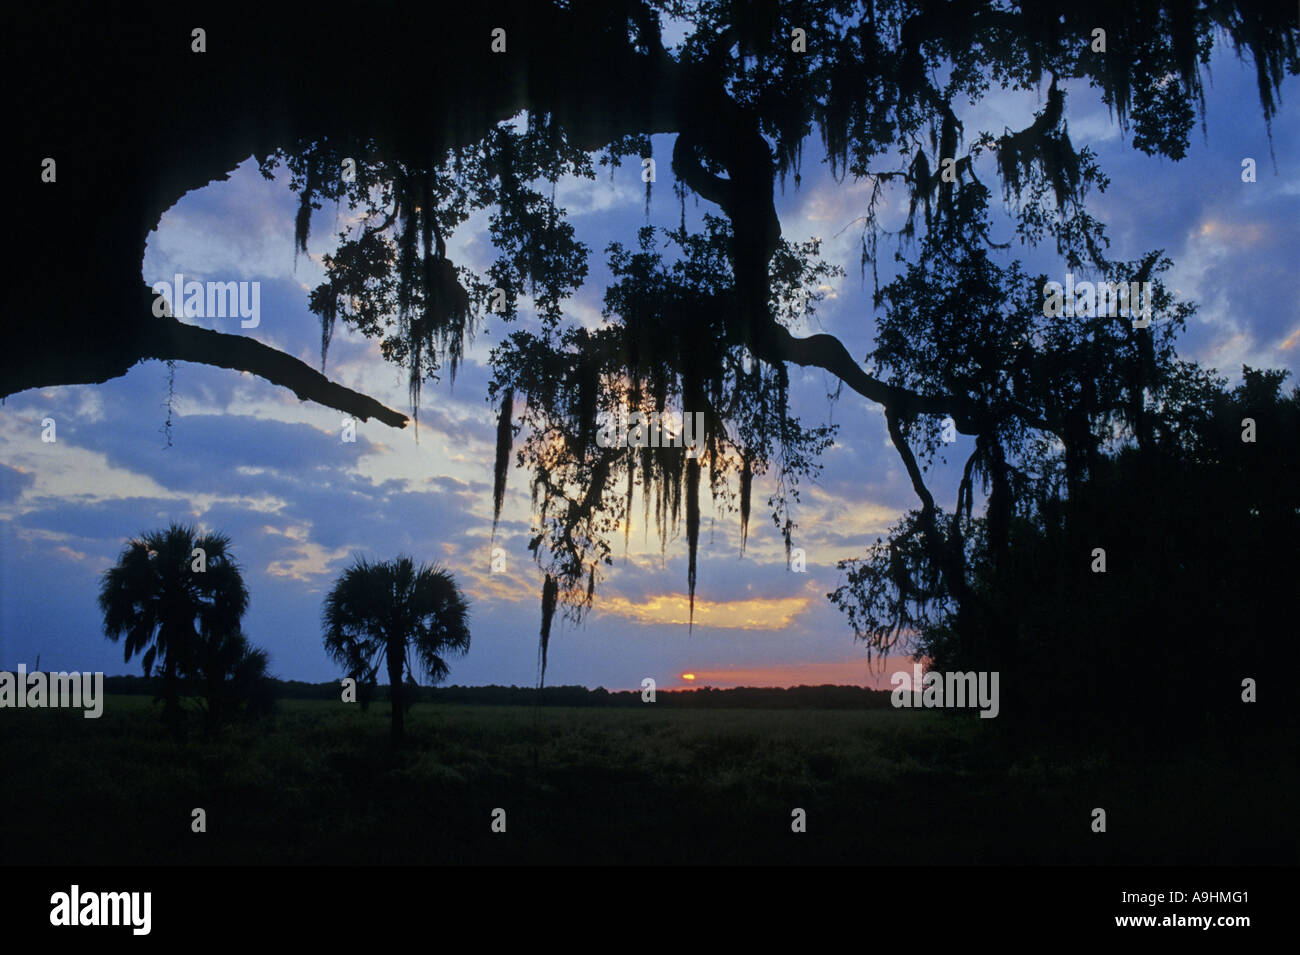 oaktree with Spanish moss, USA, Florida Stock Photo